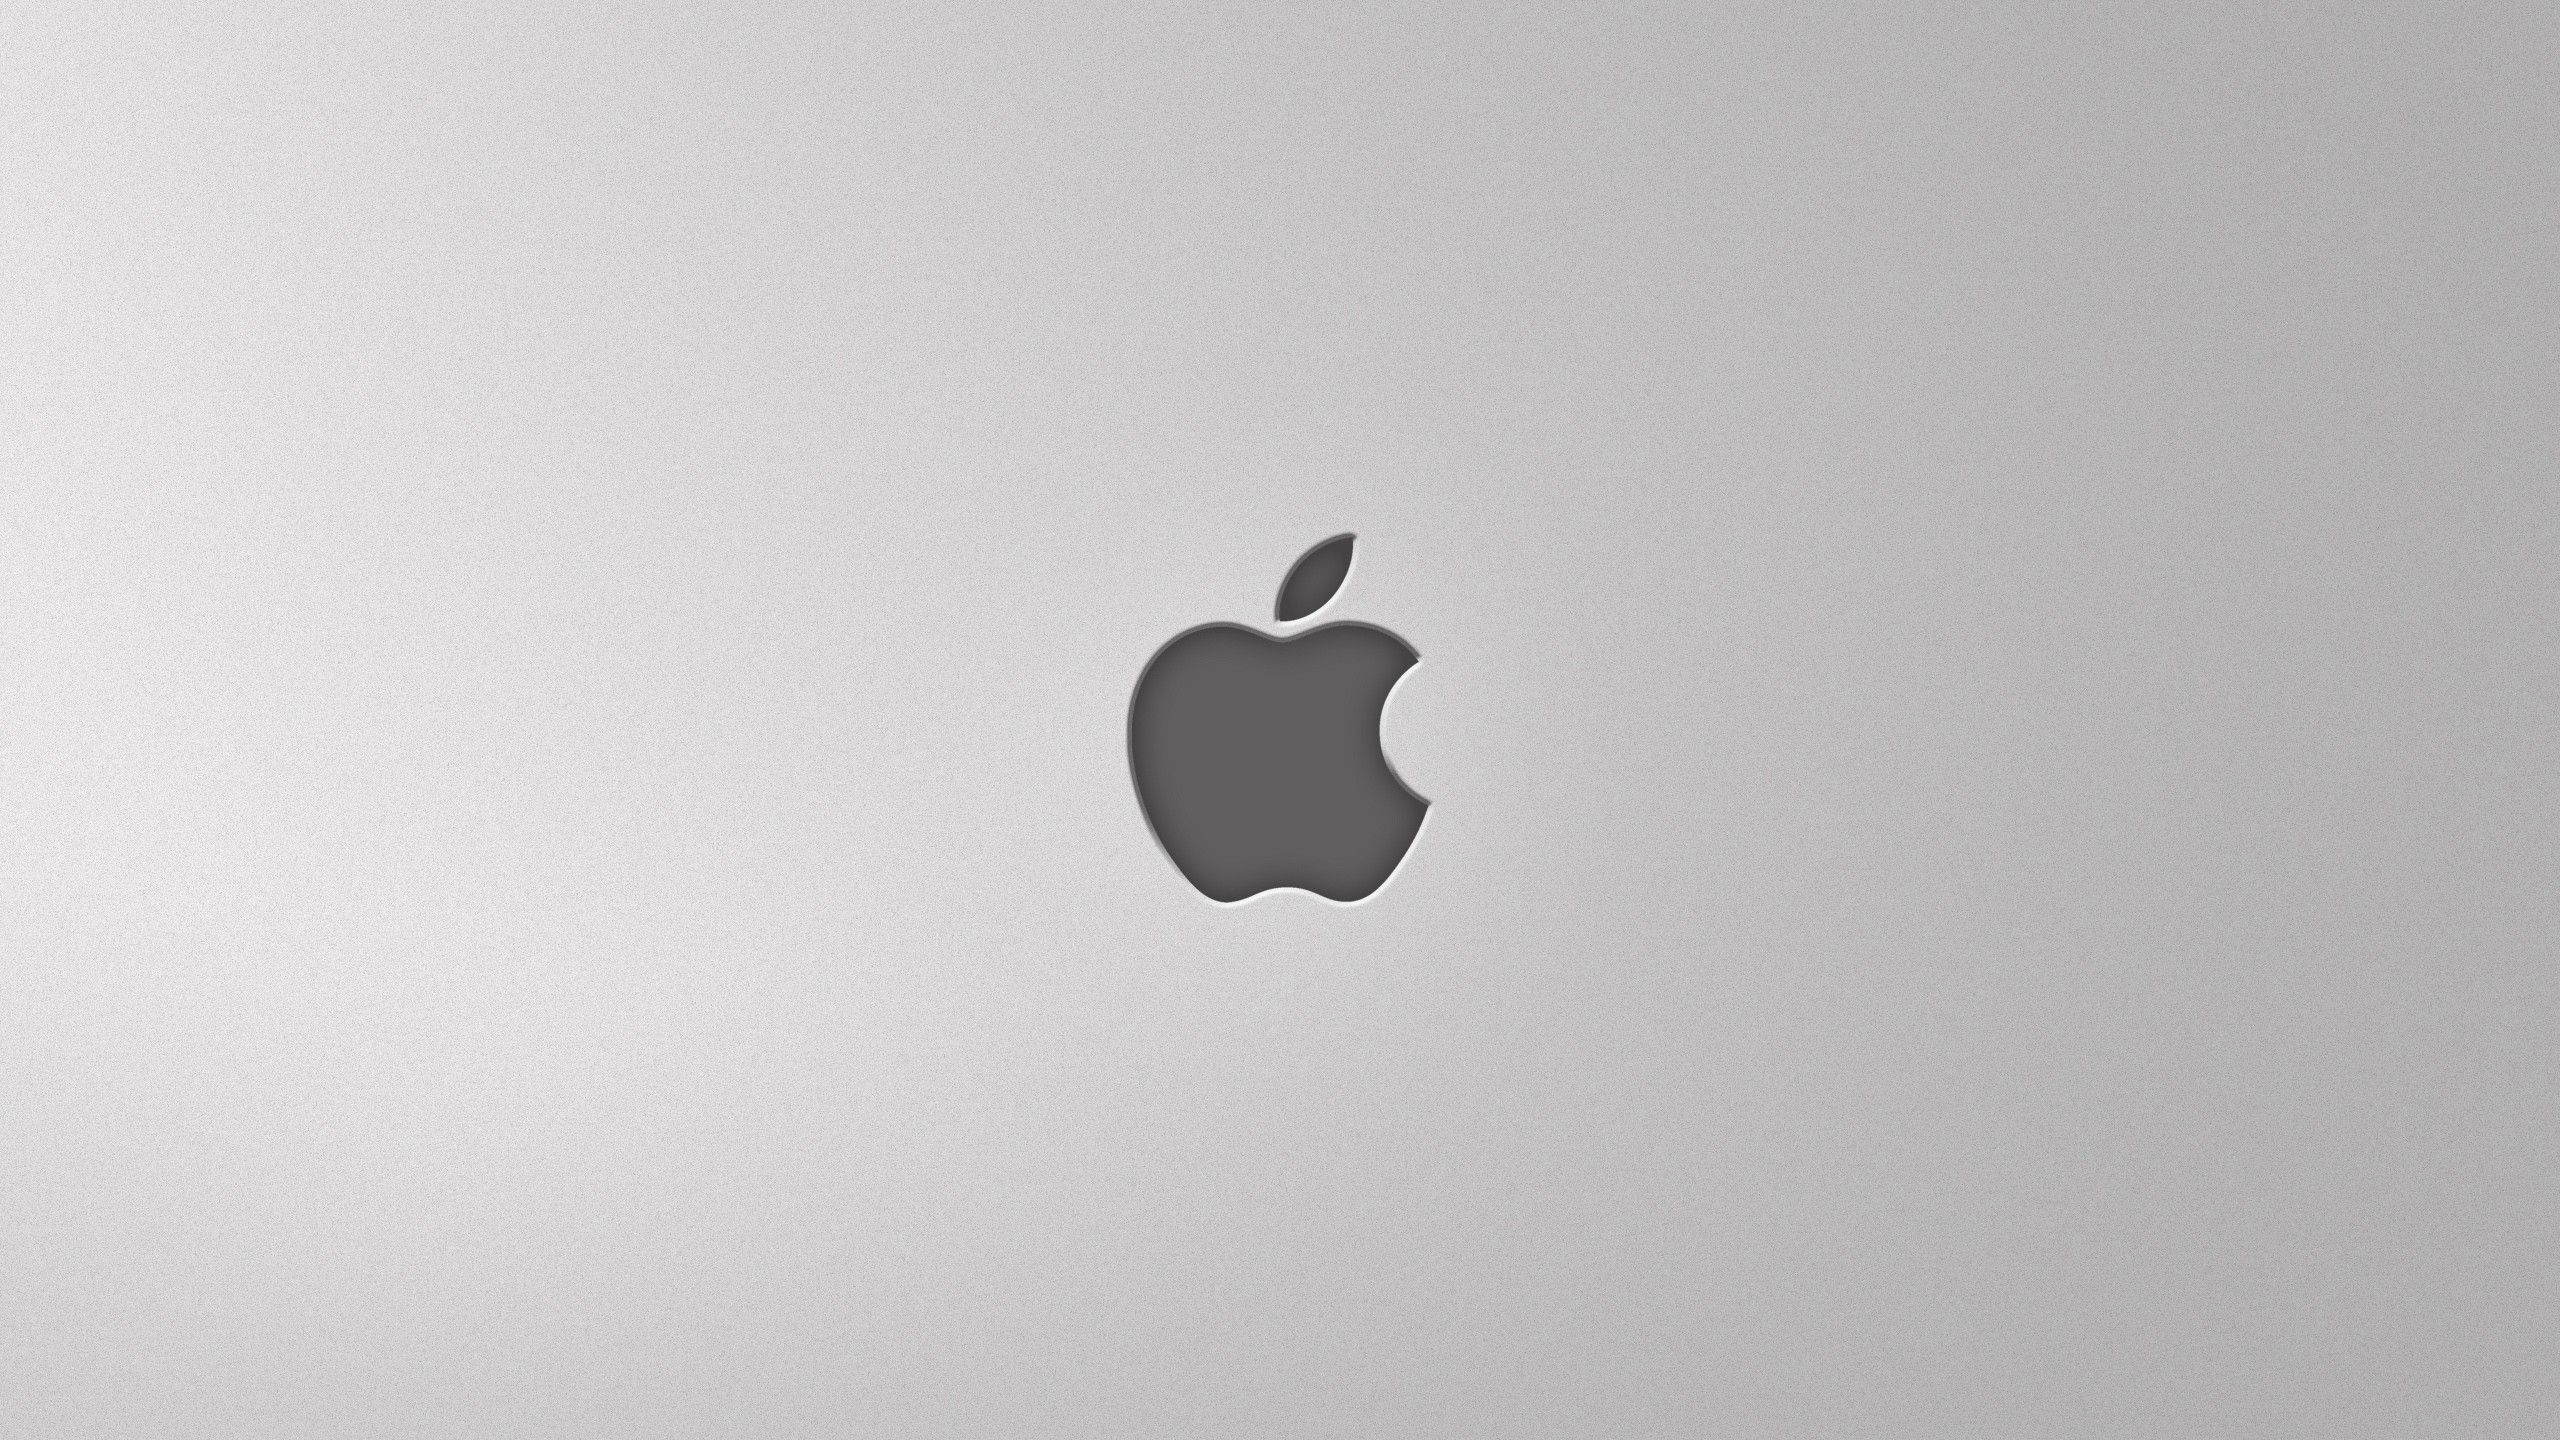 Download Wallpaper 2560x1440 Apple, Mac, Gray, Background Mac iMac ...